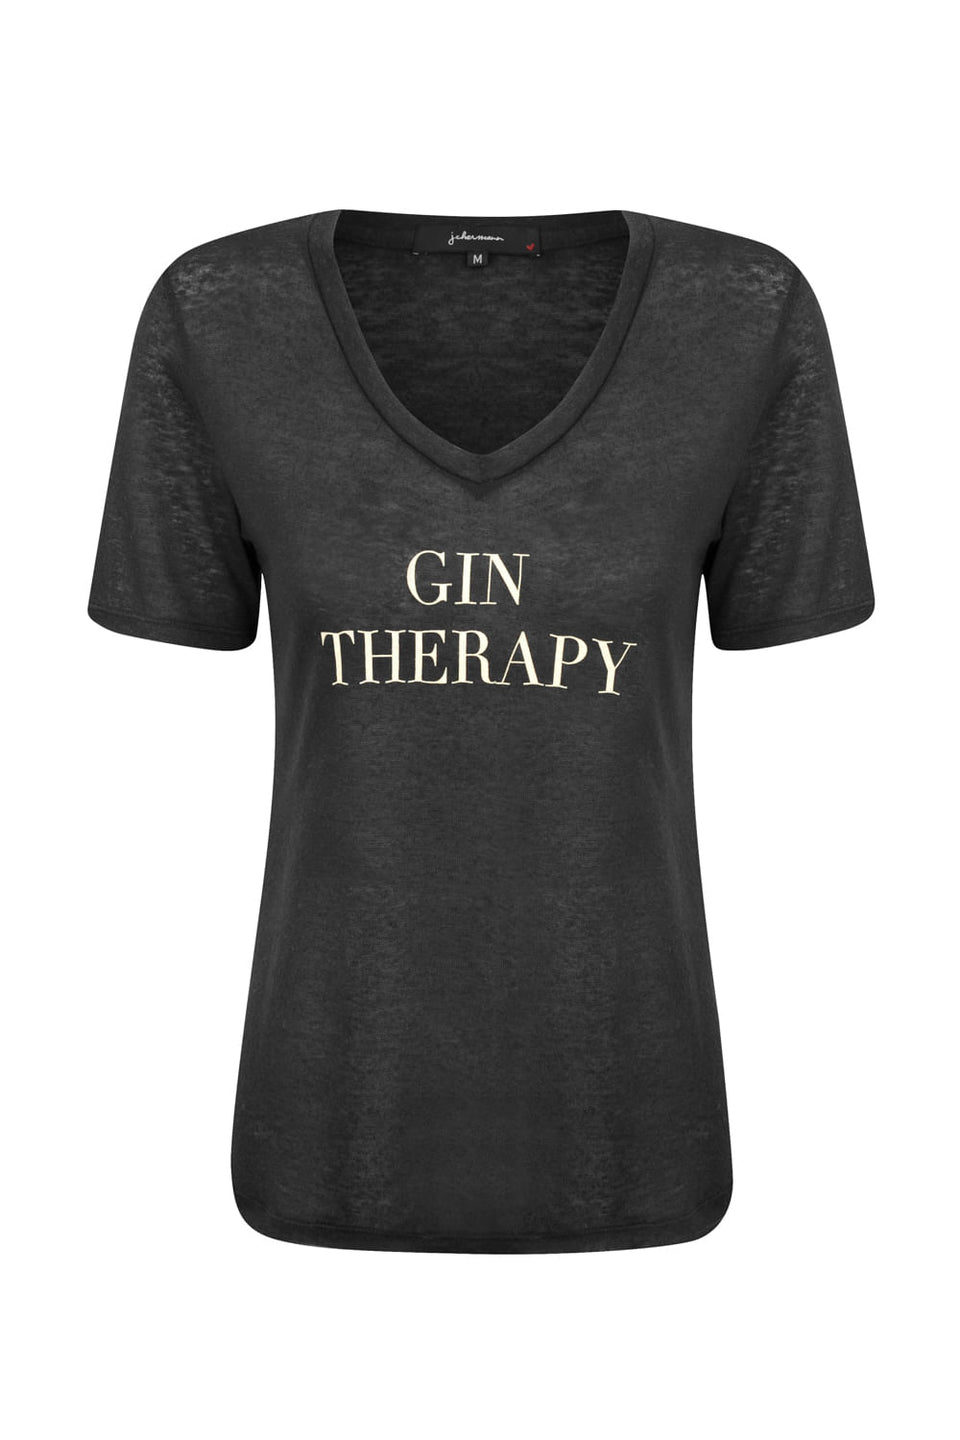 Camiseta Gin Therapy Preto